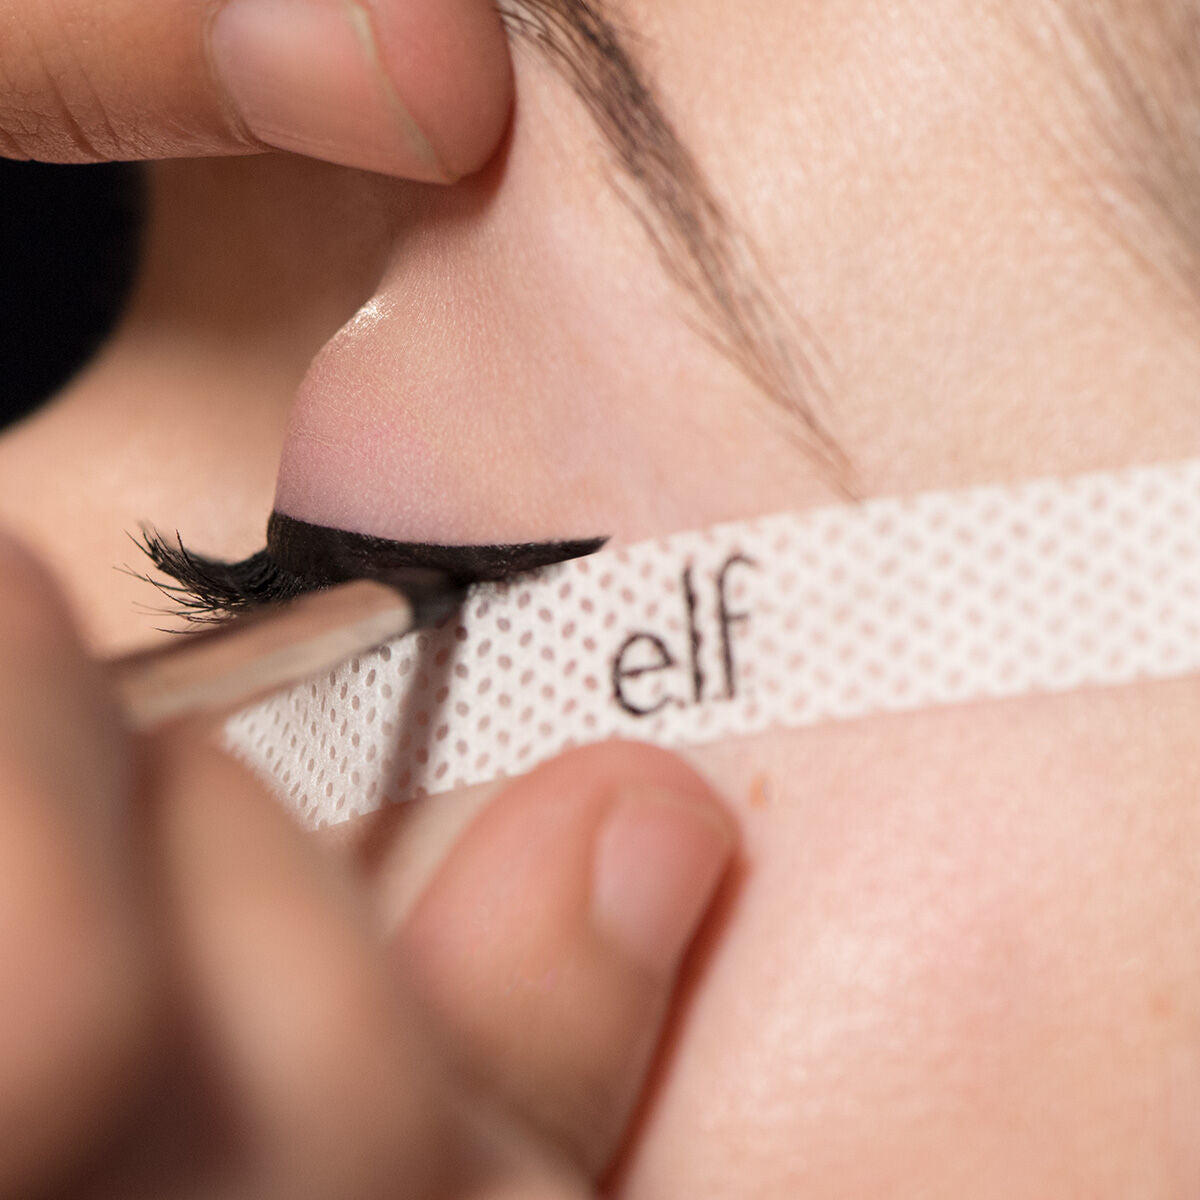 e.l.f Cosmetics Line & Define Eye Tape- 40 Strips